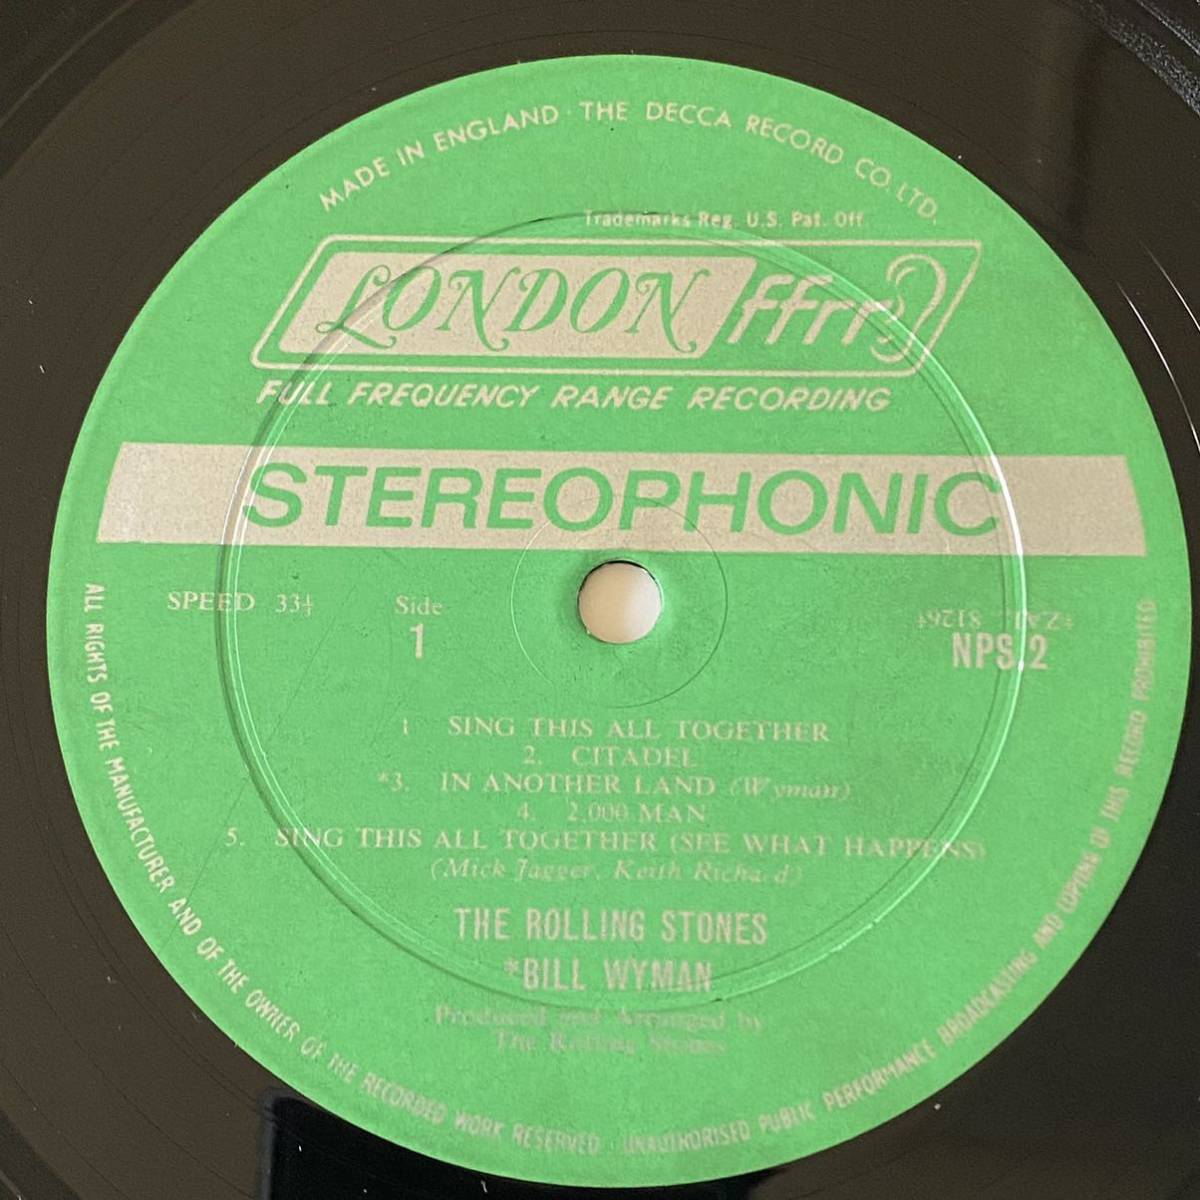 Rolling Stones ローリング ストーンズ / サタニック マジェスティーズ [LP] NPS-2 国内初版 直輸入盤 希少帯付き _画像8